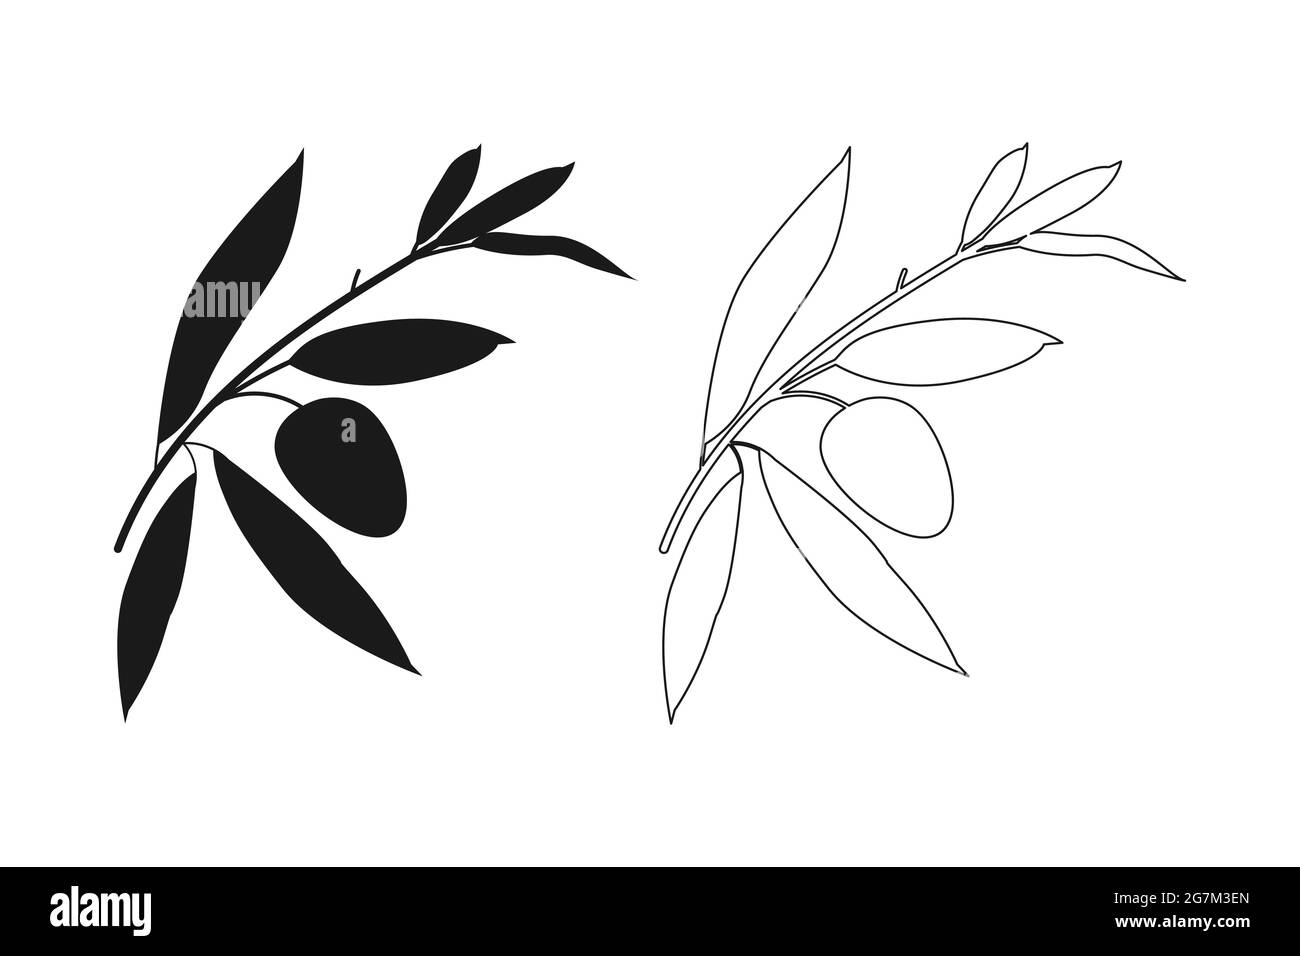 Olive branch icon set. Black flat design, outline leaves. Hand drawn natural illustration. Vector Stock Vector